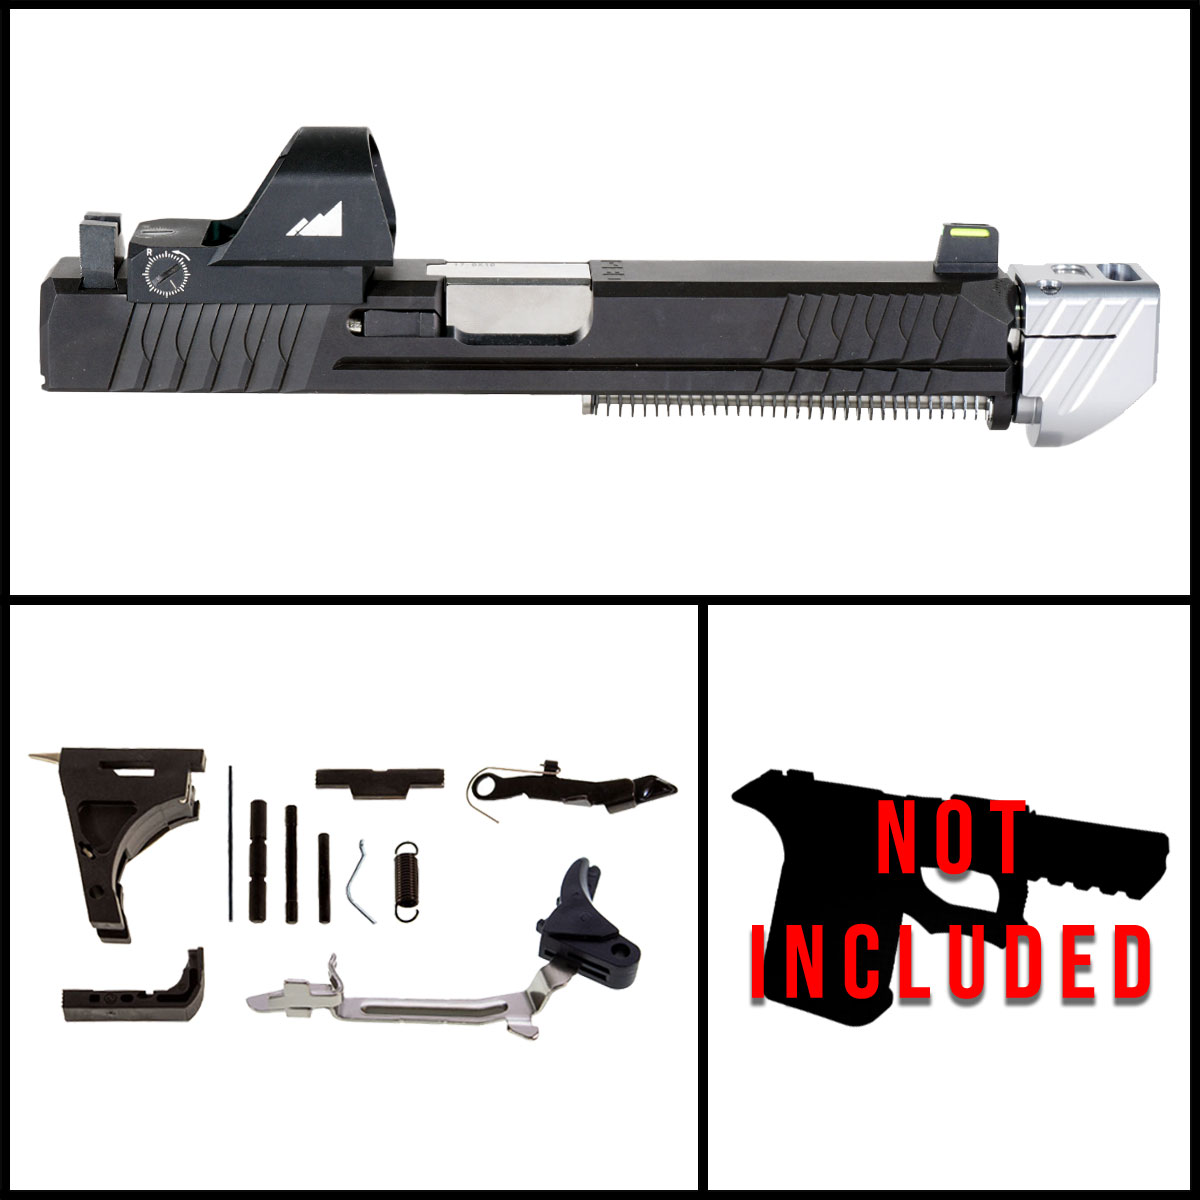 MMC 'Powder Keg' 9mm Full Pistol Build Kit - Glock 17 Gen 1-3 Compatible